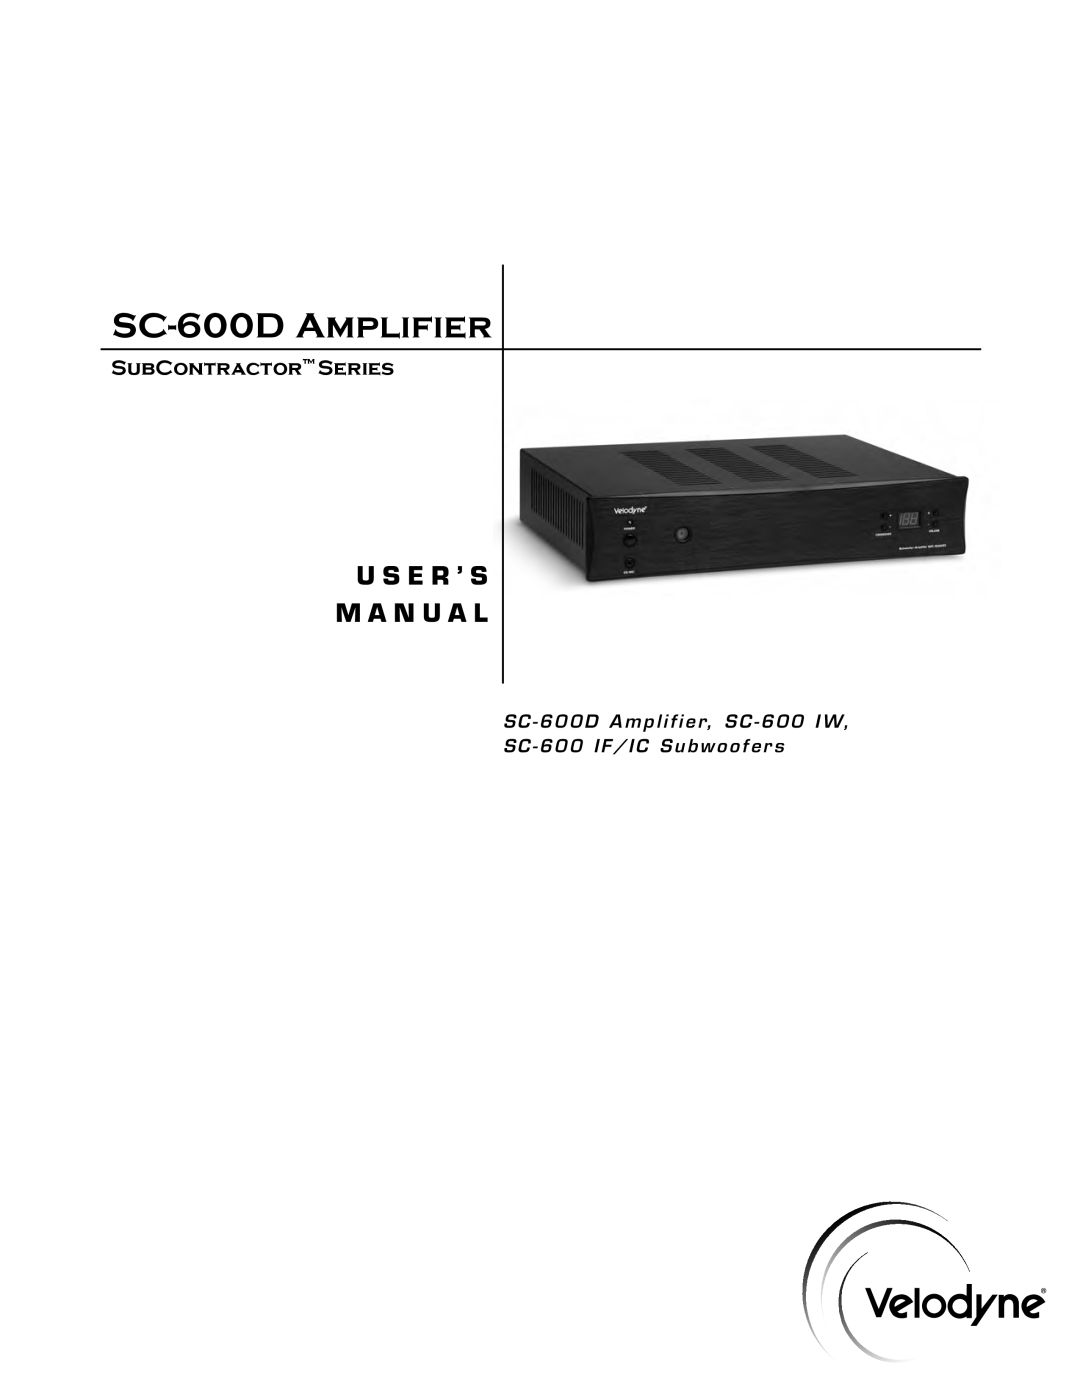 Velodyne Acoustics SC-600 IF/IC, SC-600 IW user manual SC-600DAmplifier, U S E R ’ S M A N U A L, SubContractor Series 